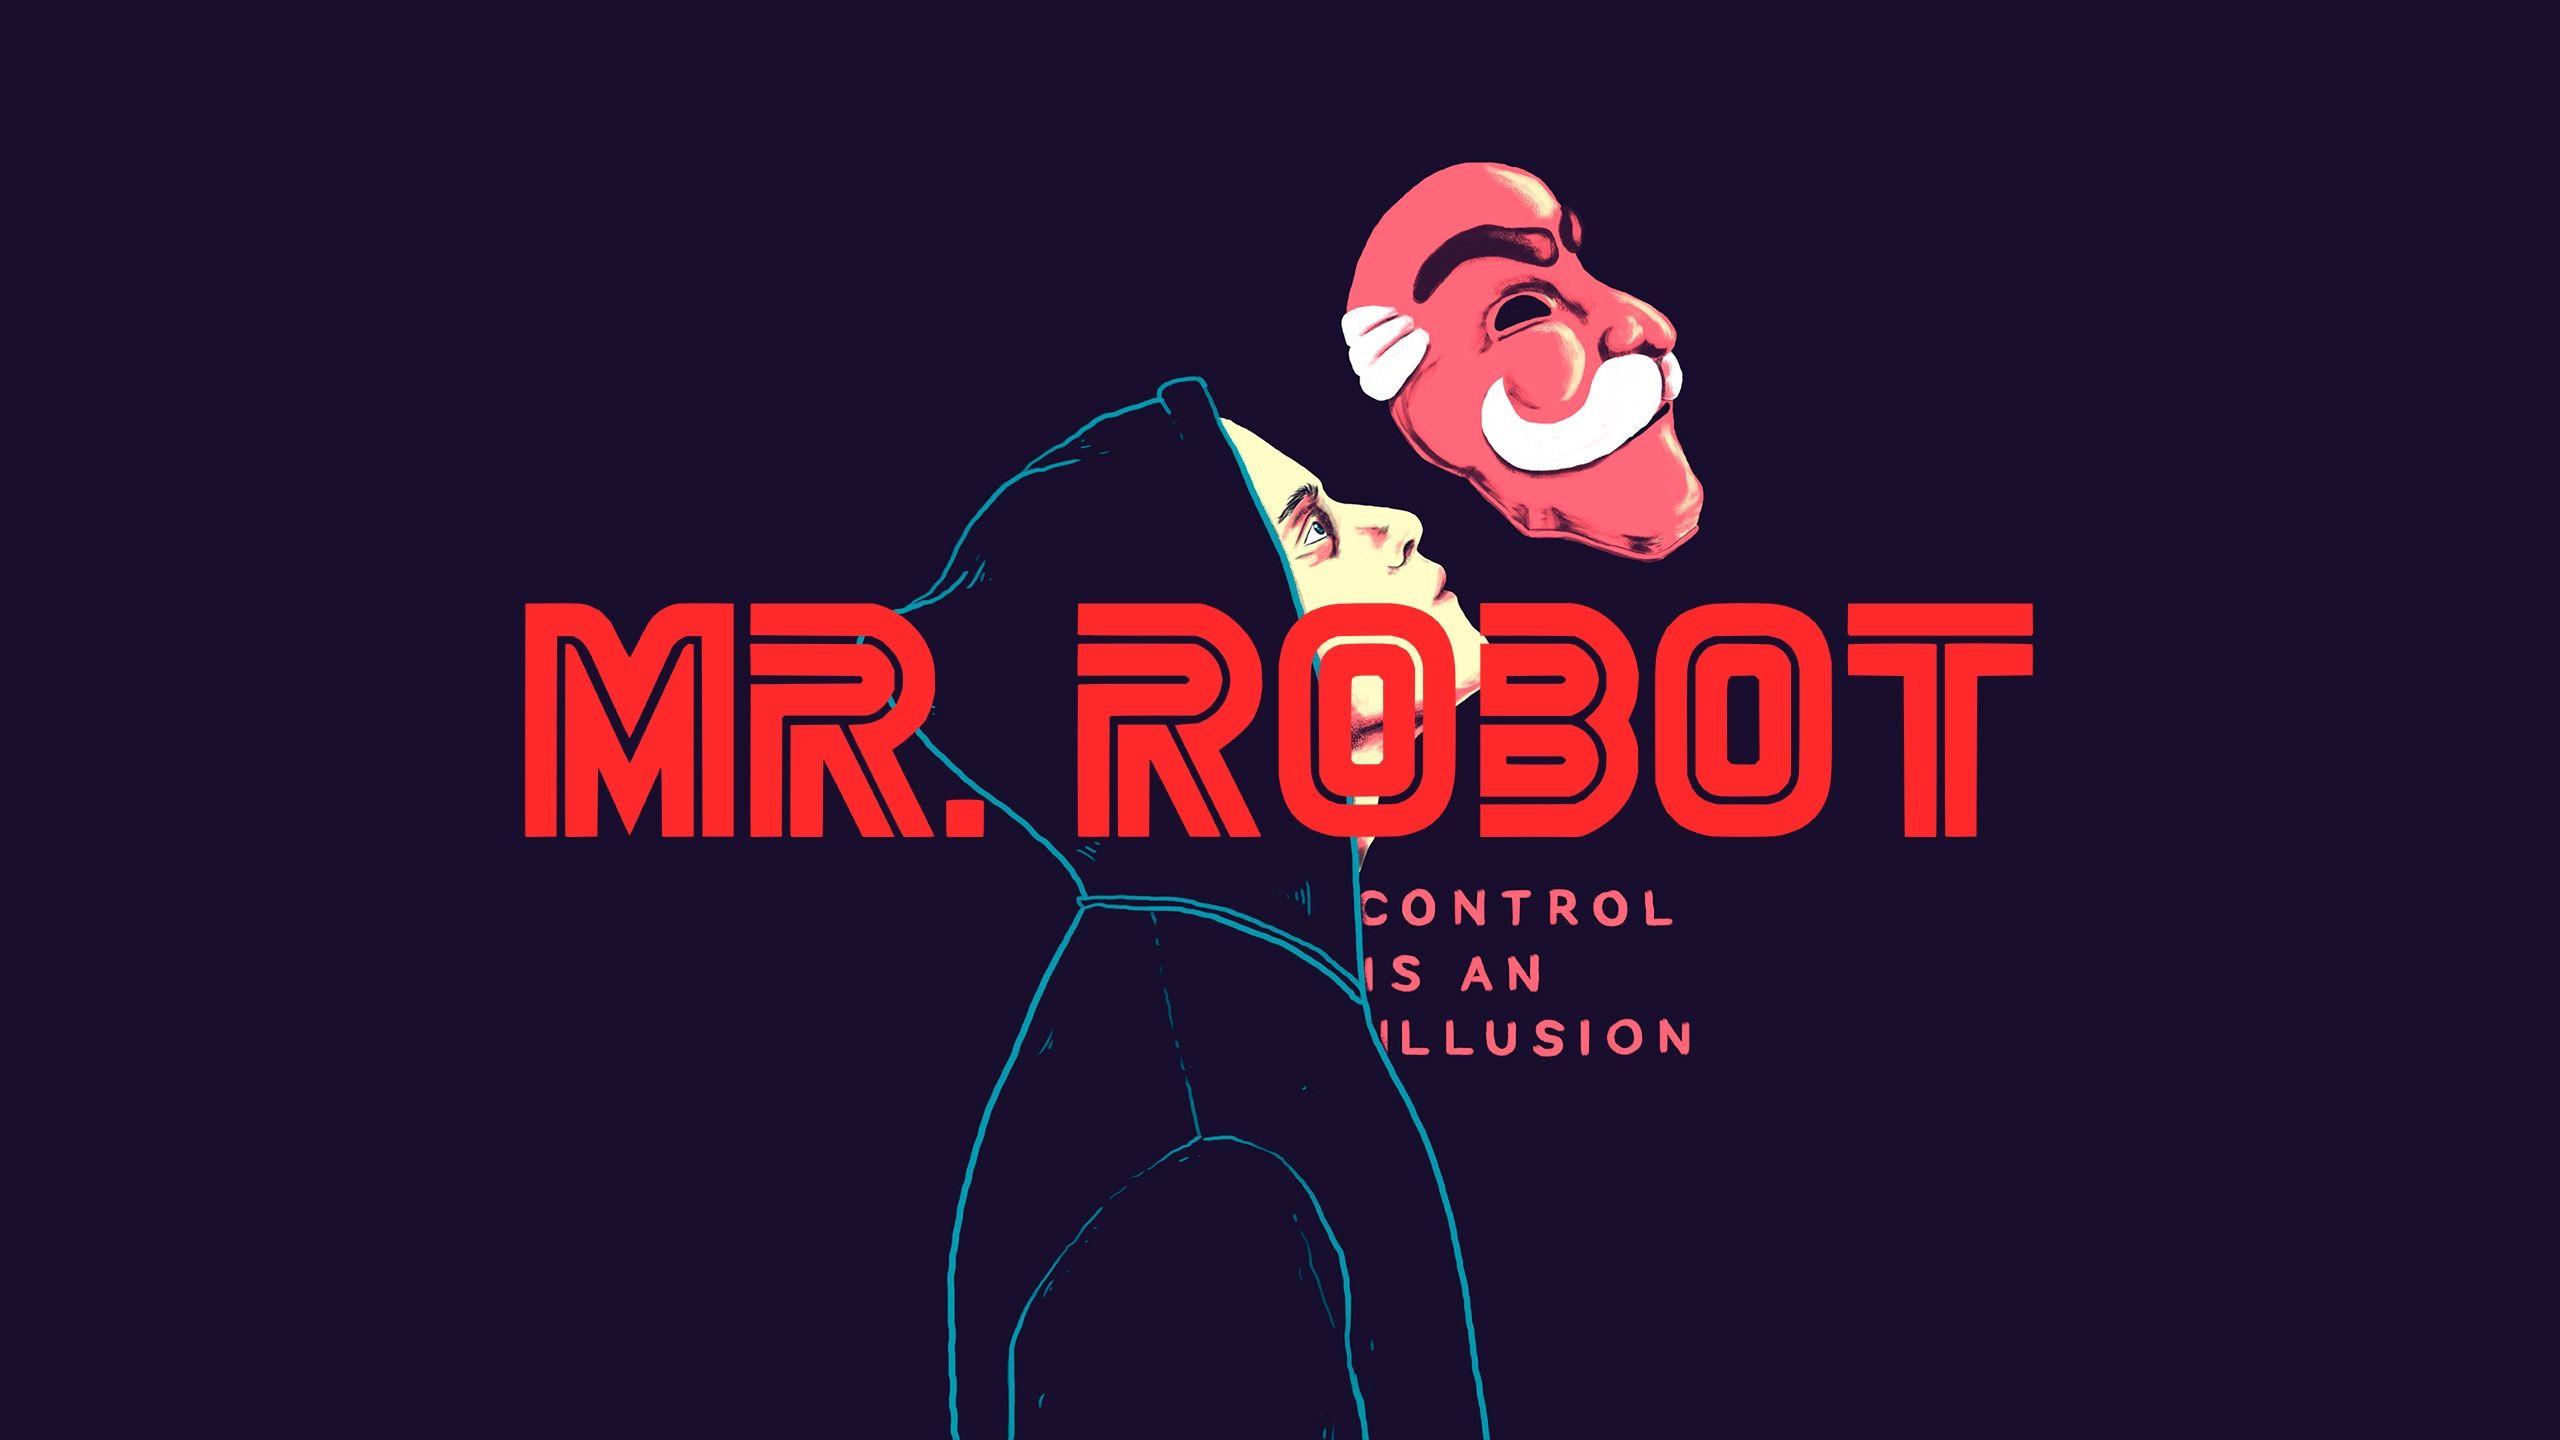 Download 2560x1440 Mr. Robot, Tv Series, Artwork Wallpaper for iMac